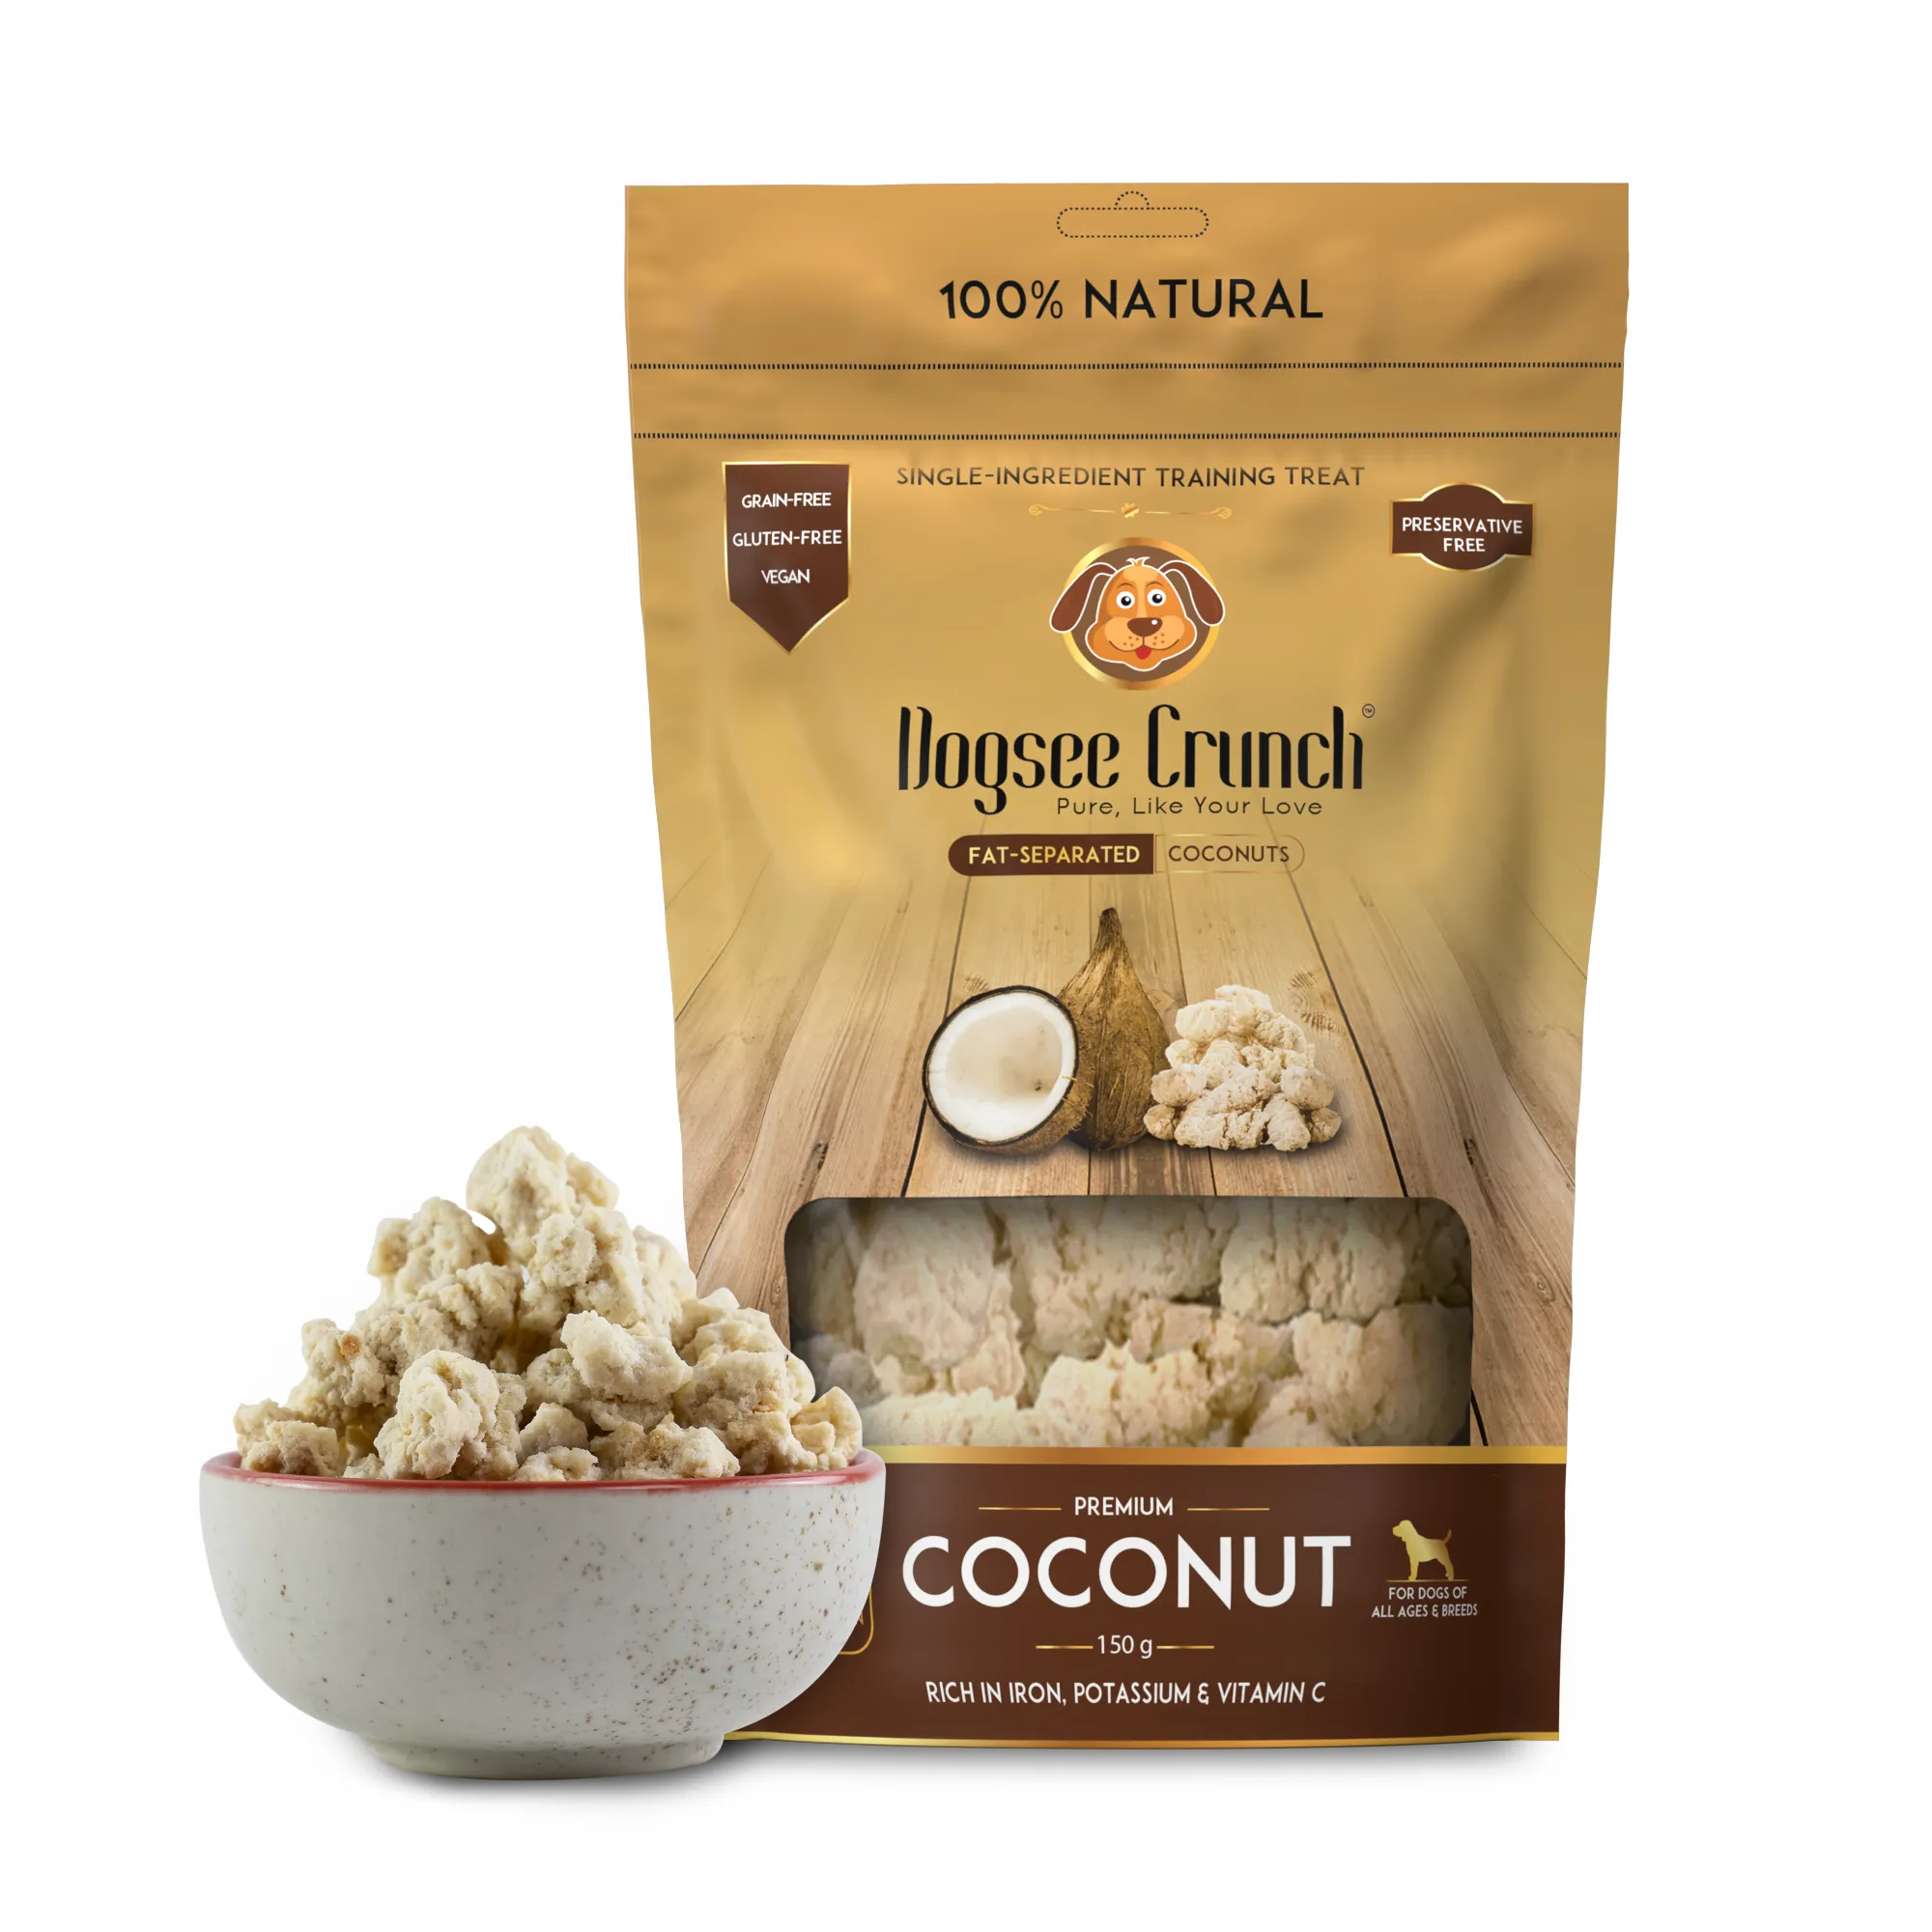 fat-separated coconut treats